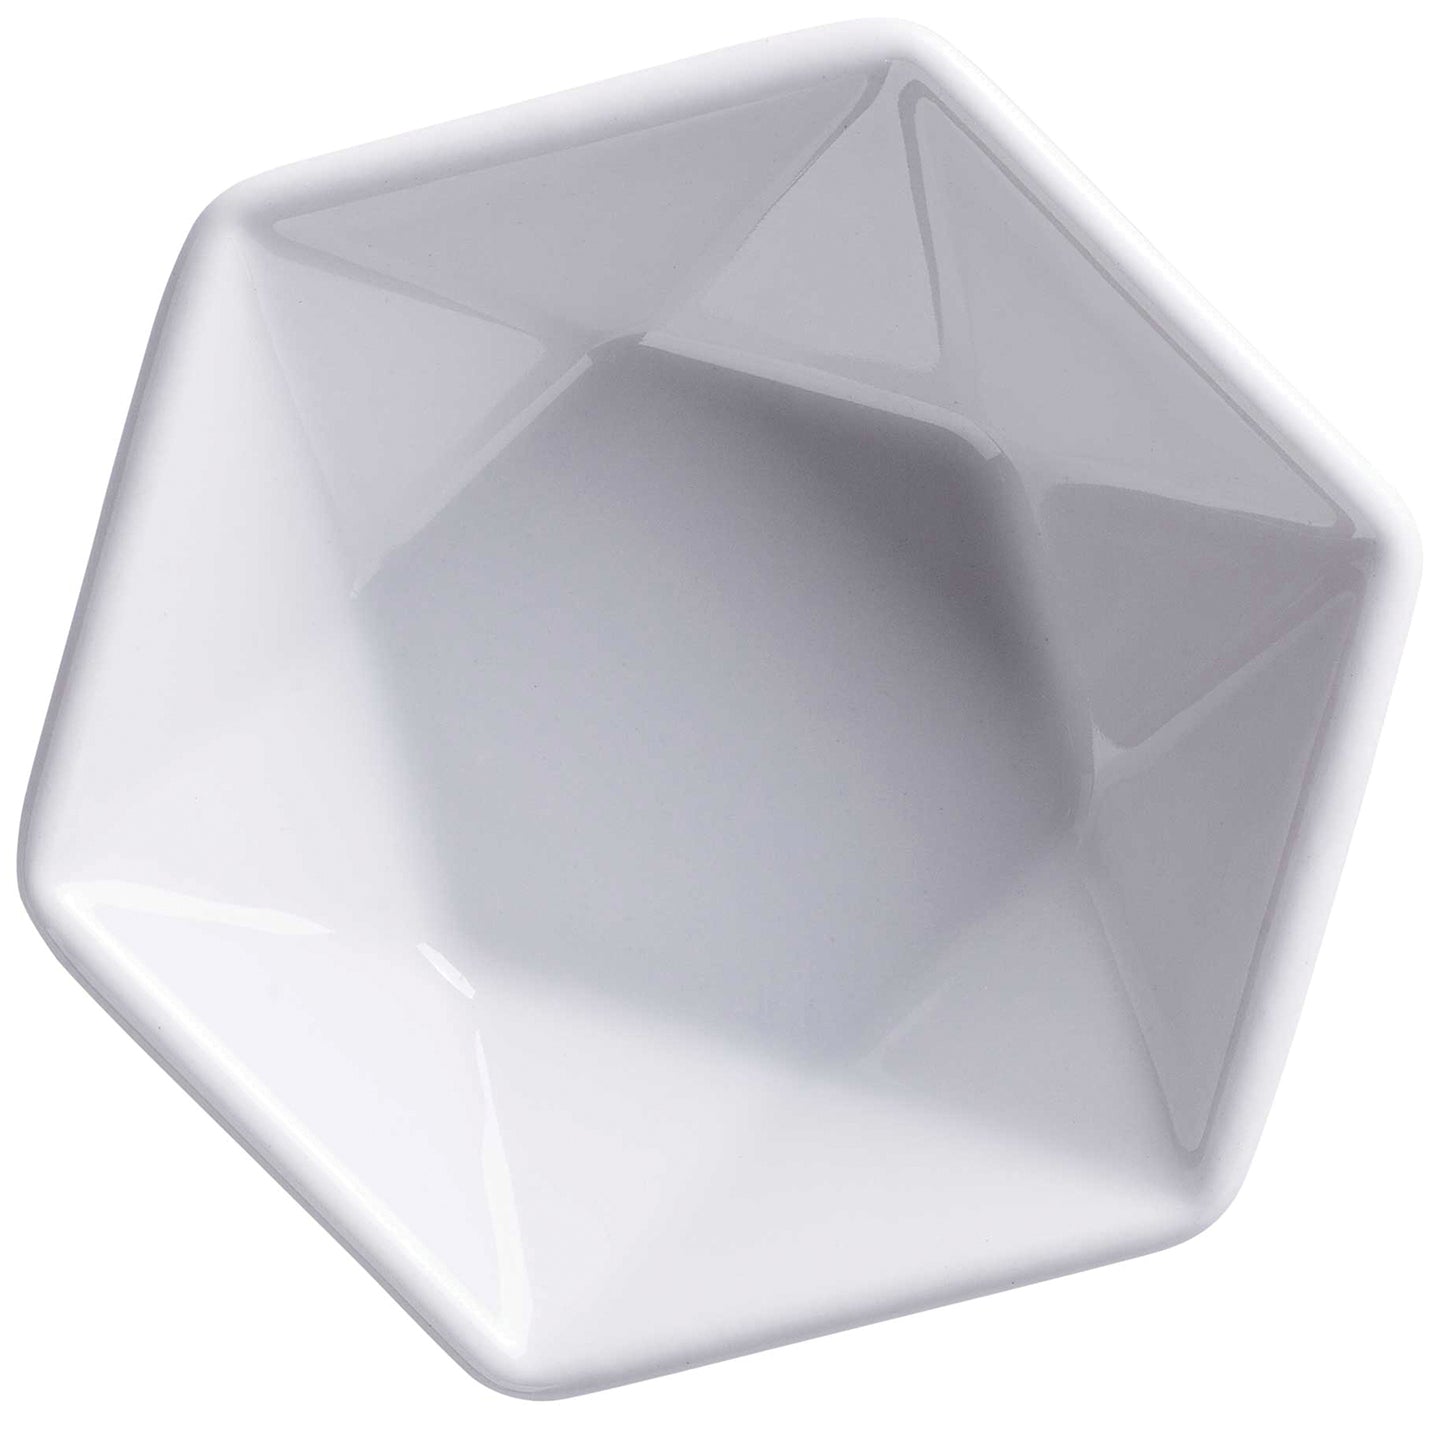 2 3/4" x 2 3/4" Bright White Porcelain Hexagonal Plate, Corona Actualite (Stocked) (12 Pack)